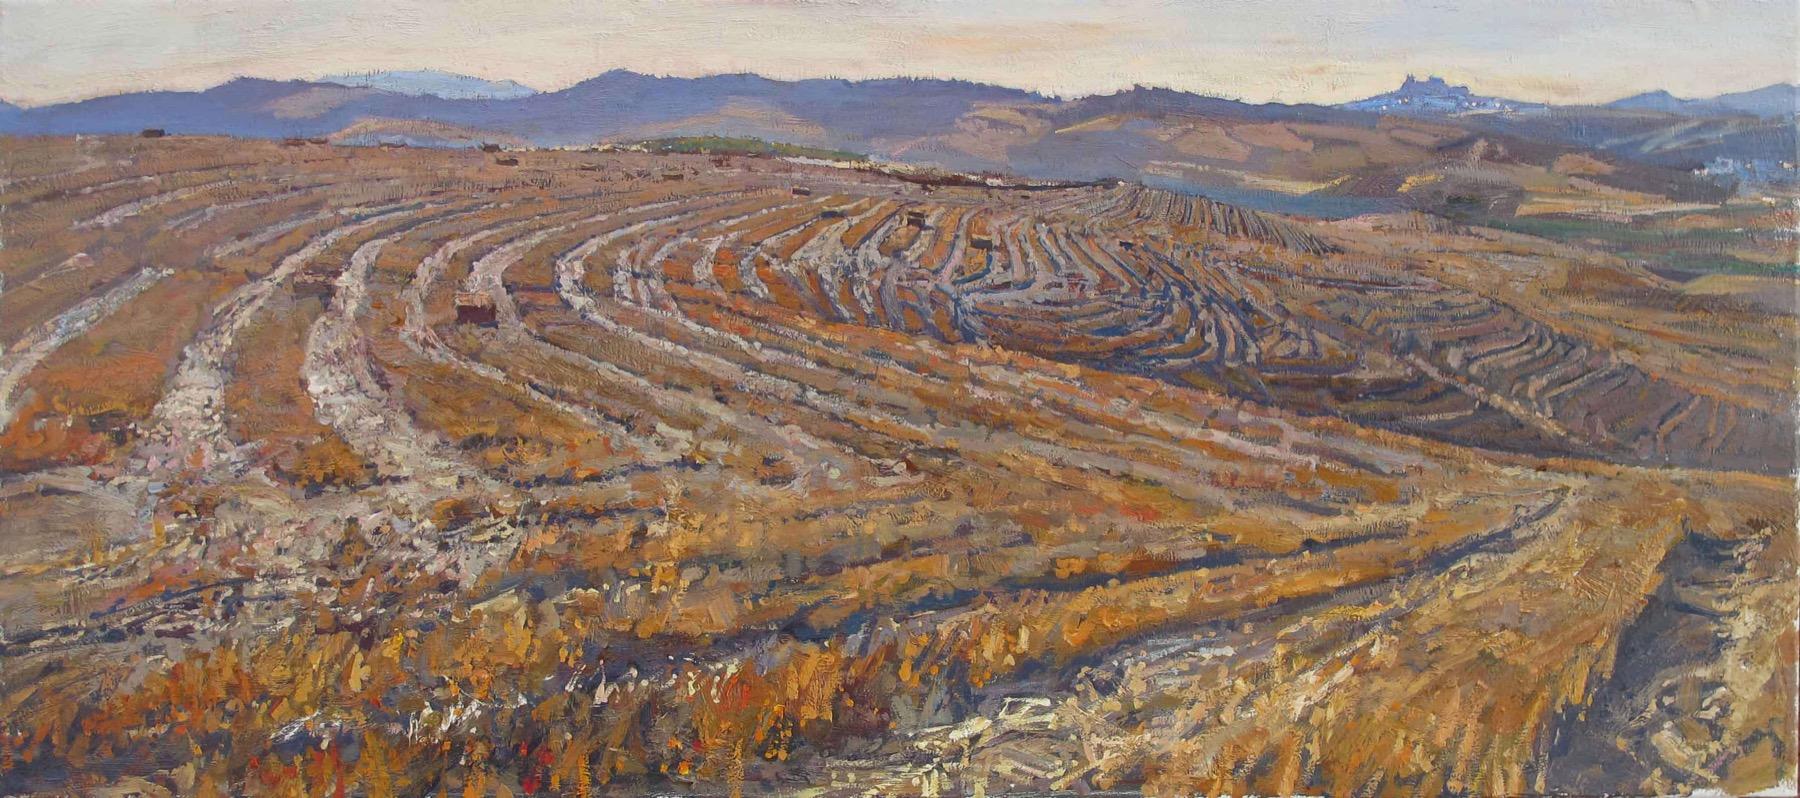 Antonio's fields. Original modern art painting